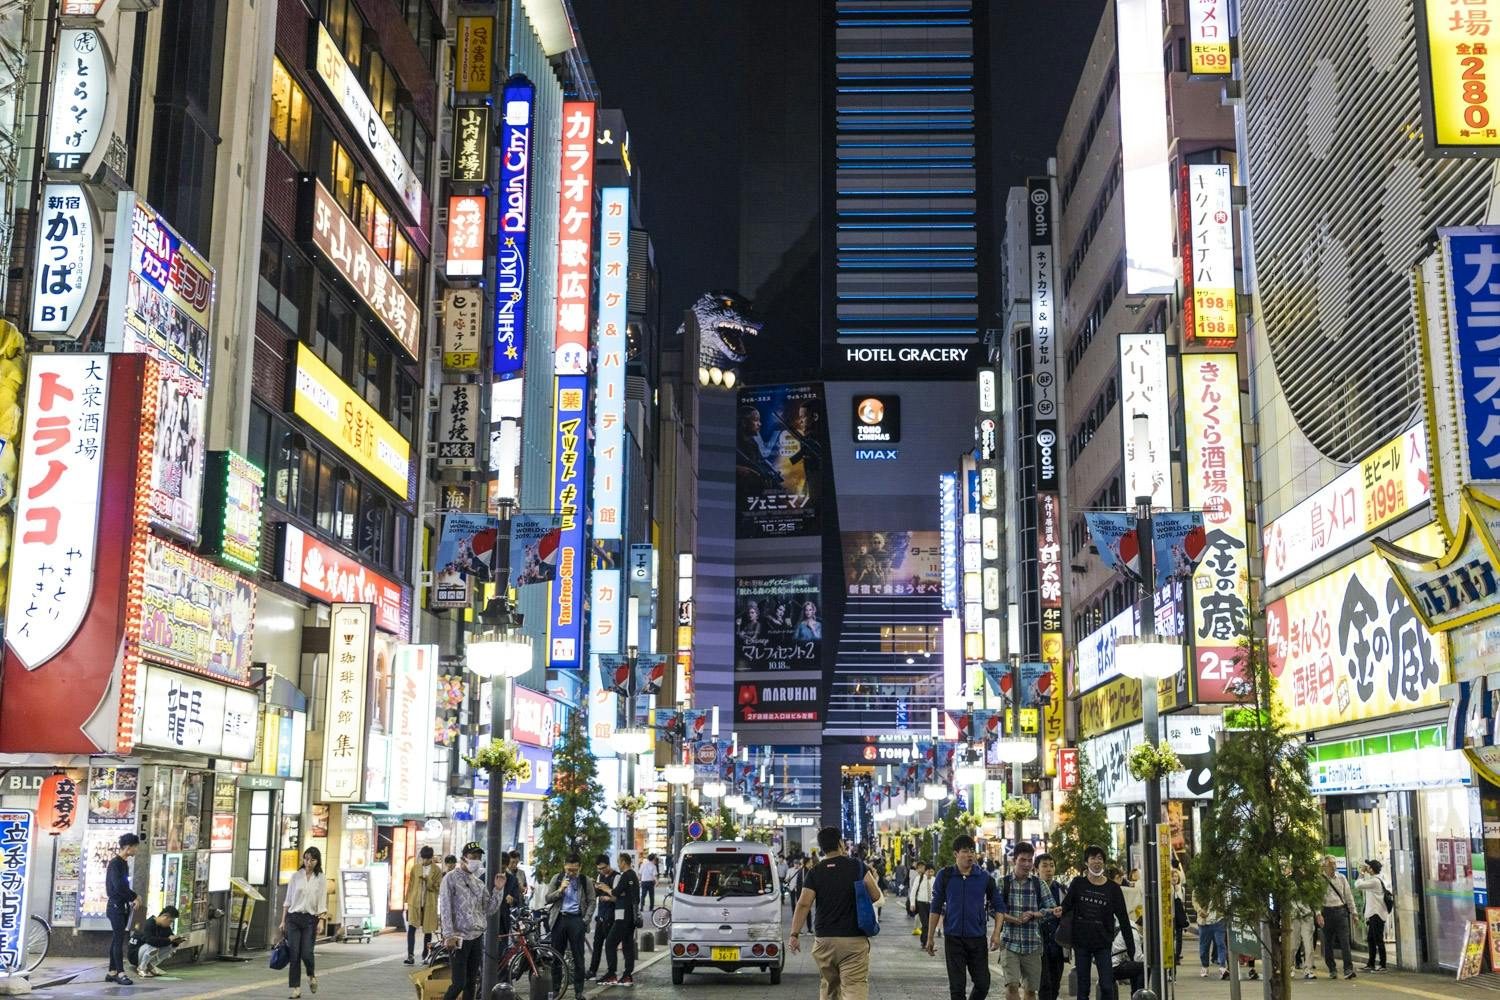 3-Hour Guided Food Tour of Tokyo's Shinjuku Golden Gai